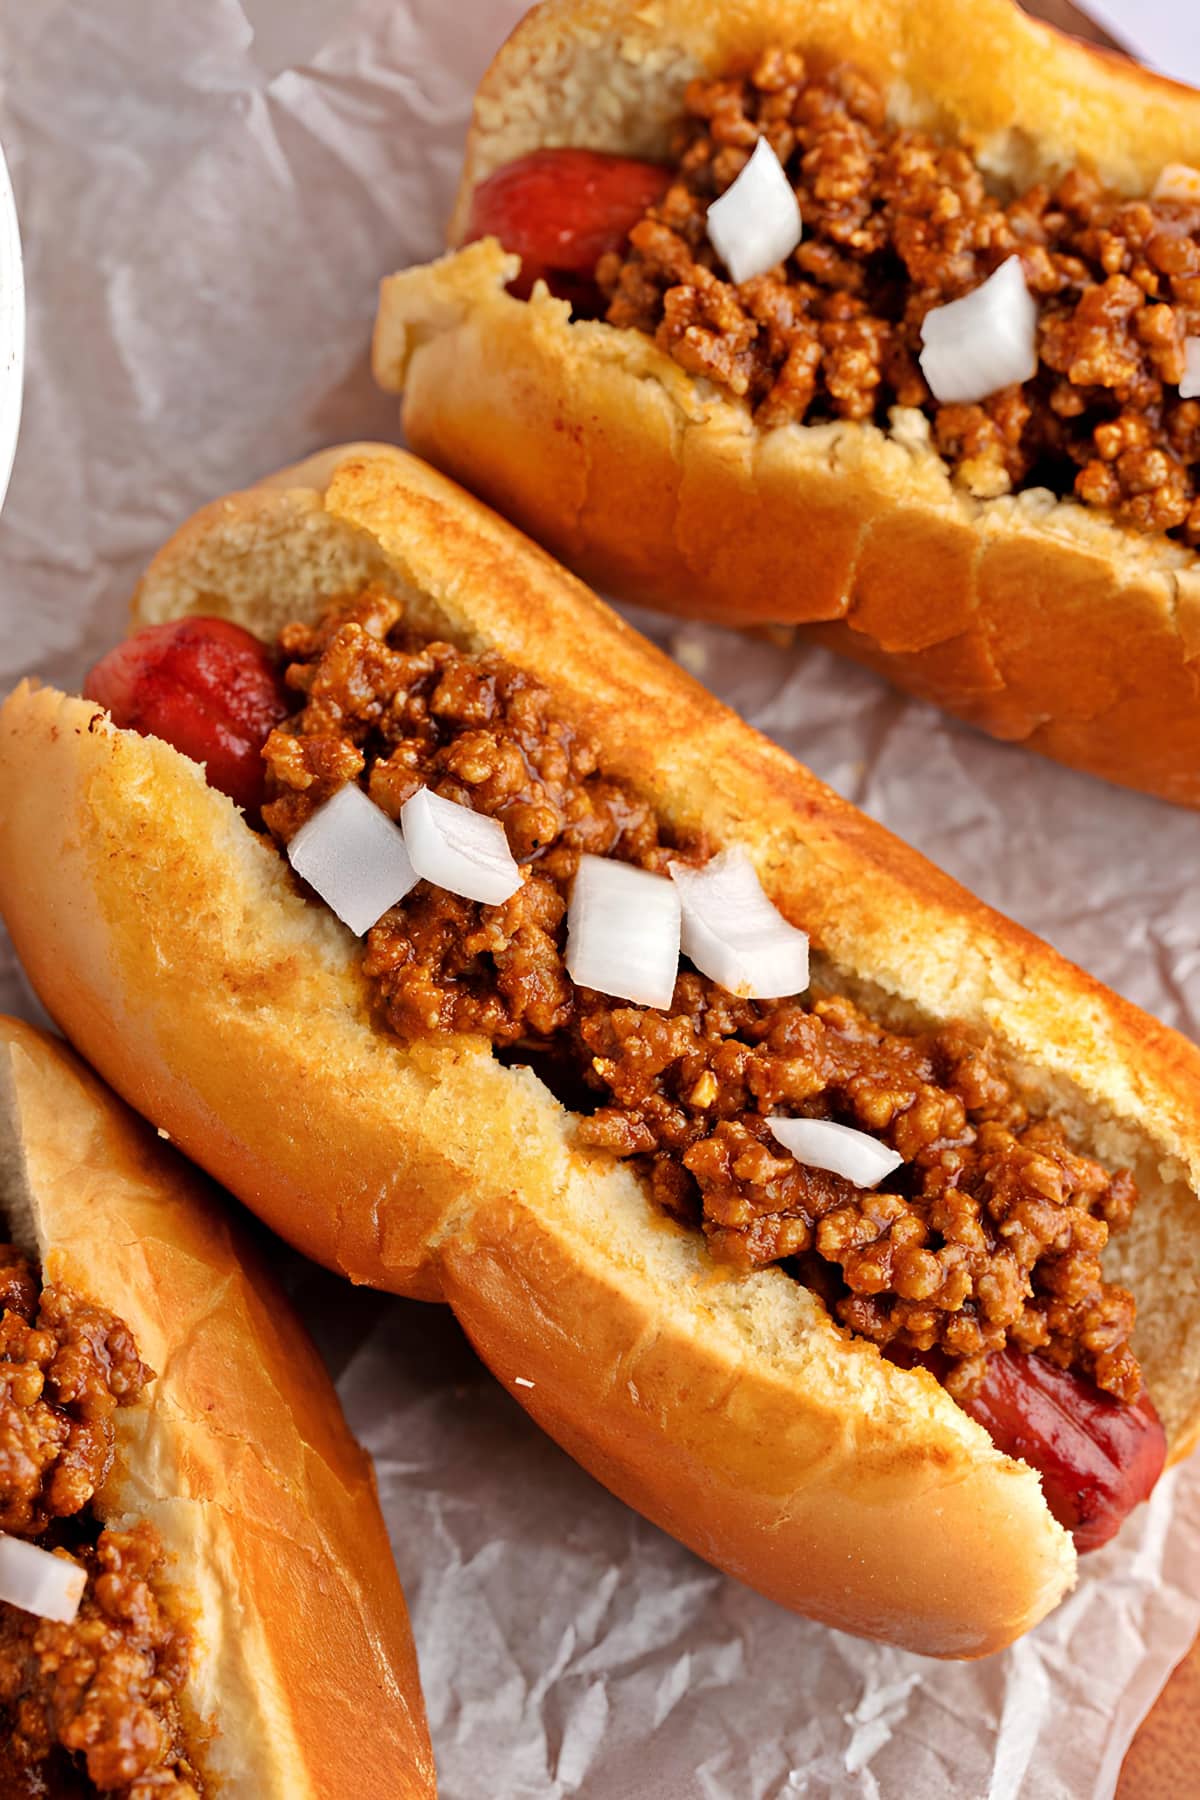 Homemade Hot Dog Chili Sandwich with Ground Beef and Radish